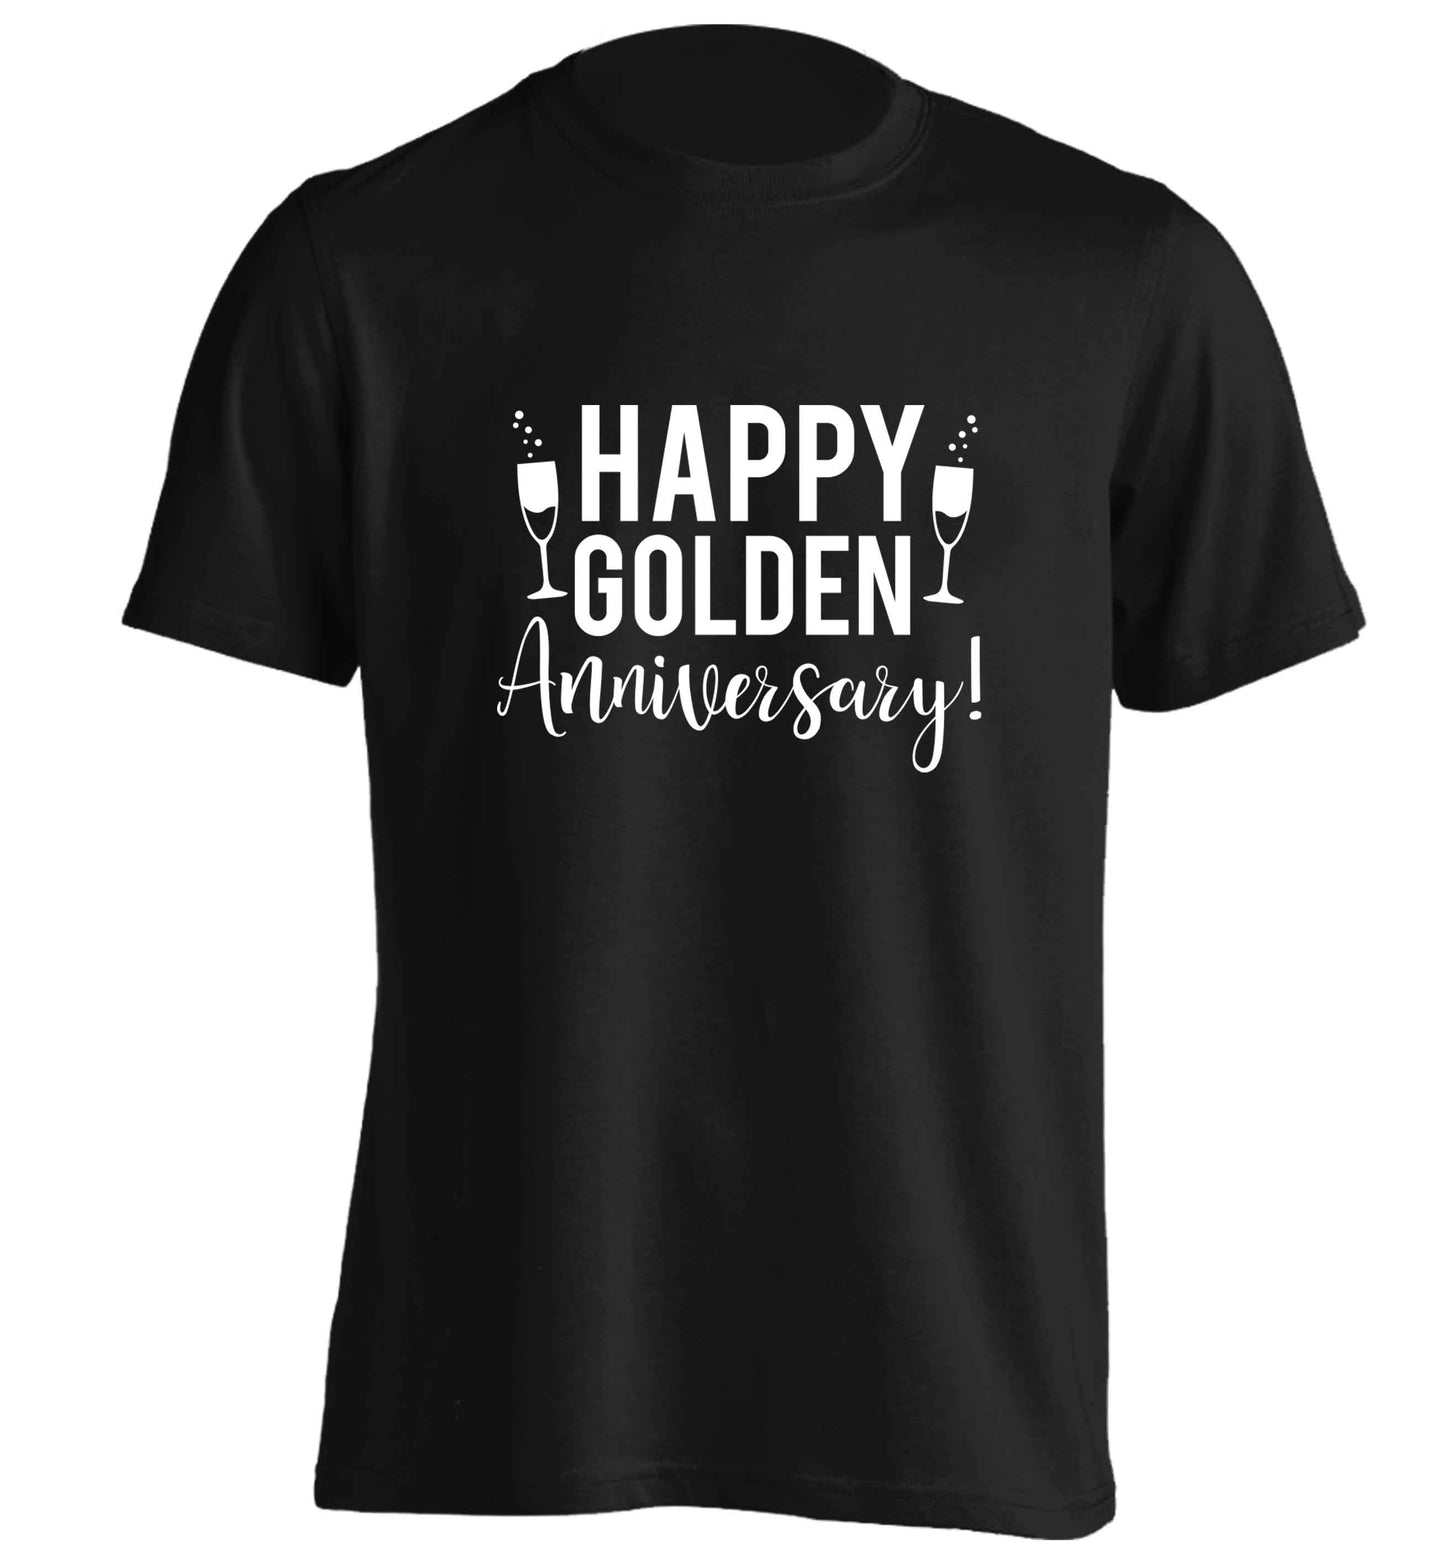 Happy golden anniversary! adults unisex black Tshirt 2XL